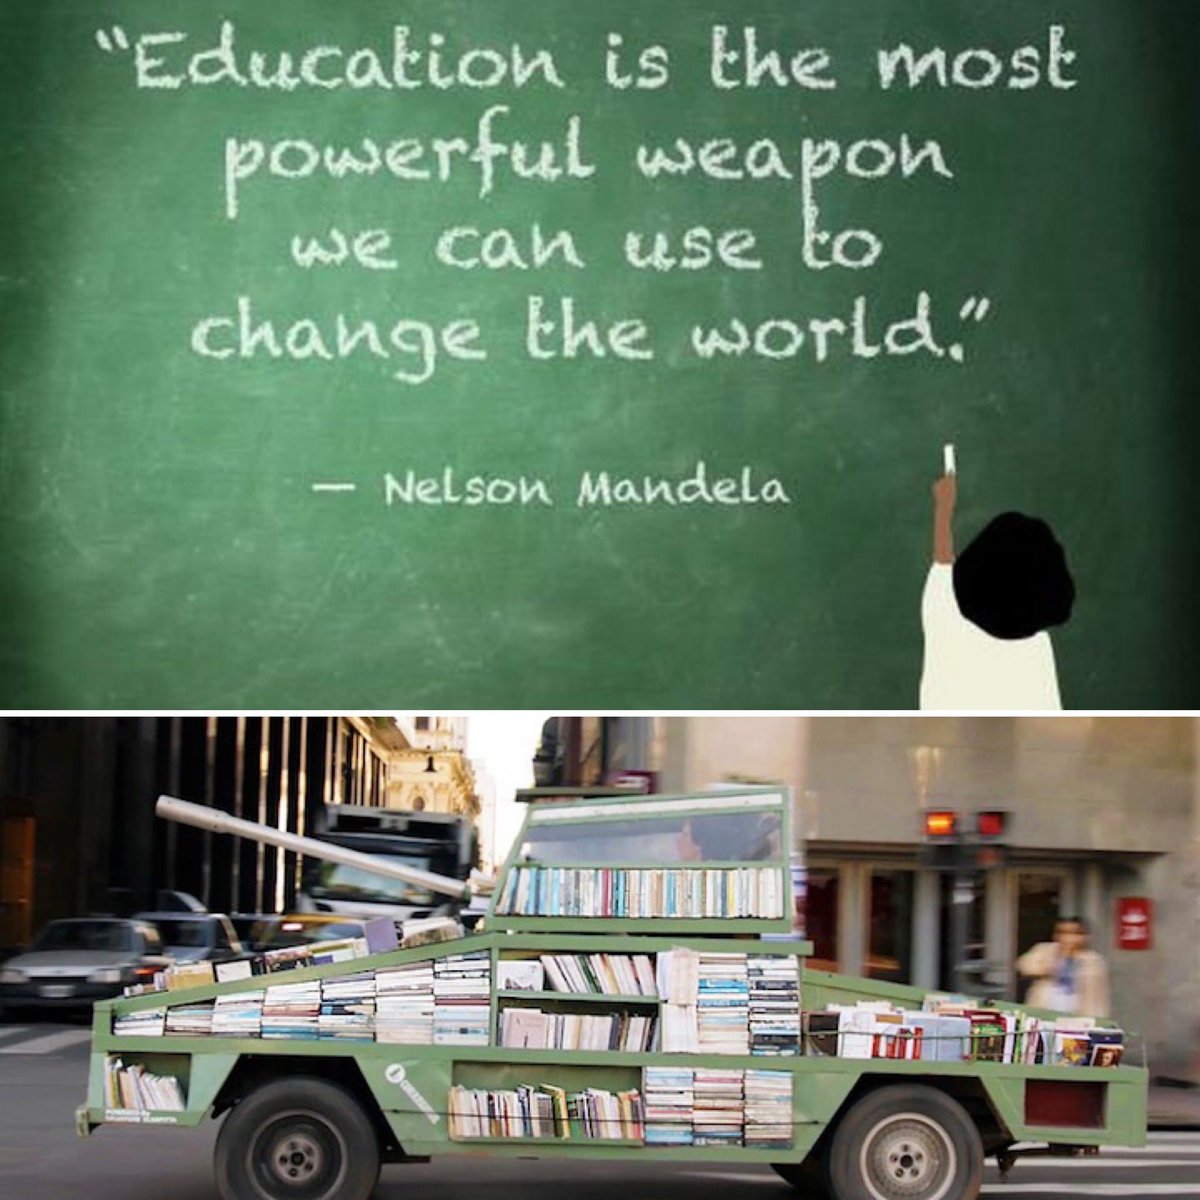 @Diverse_Edu @dHL_edu @judybsb49 @renier1901 @stephaniesped1 @TwinklDigest @teacher_marx @zkruger7 @Sofiavelentza46 @AlexEdpuzzle Weapon of mass instruction … 

Education is the most powerful weapon we can use to change the world” - Nelson Mandela 🙏🫶👇